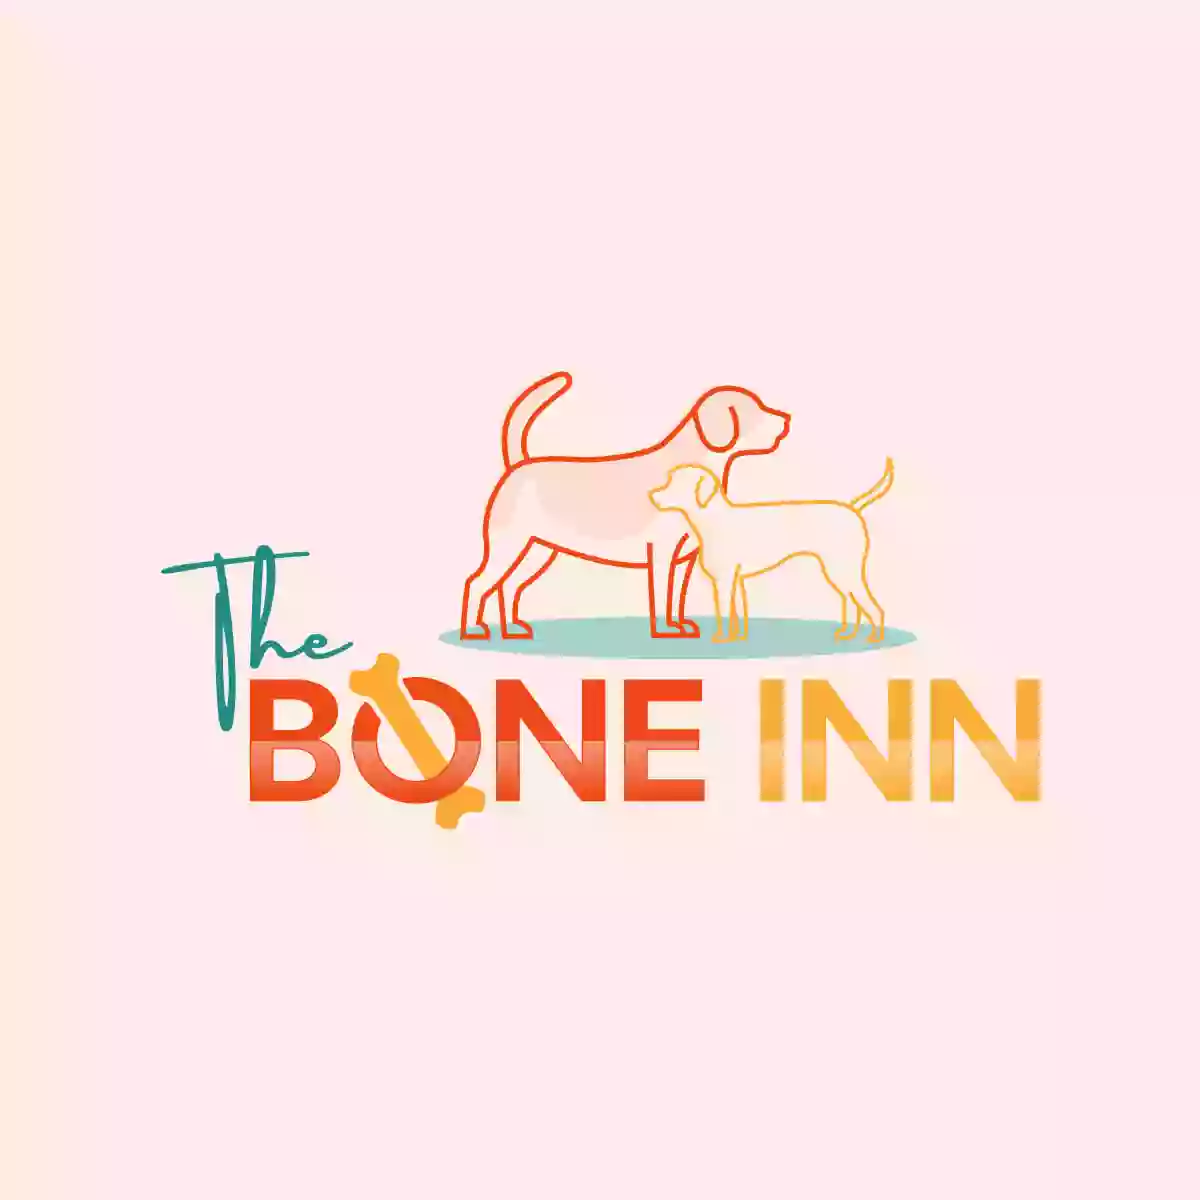 The Bone Inn